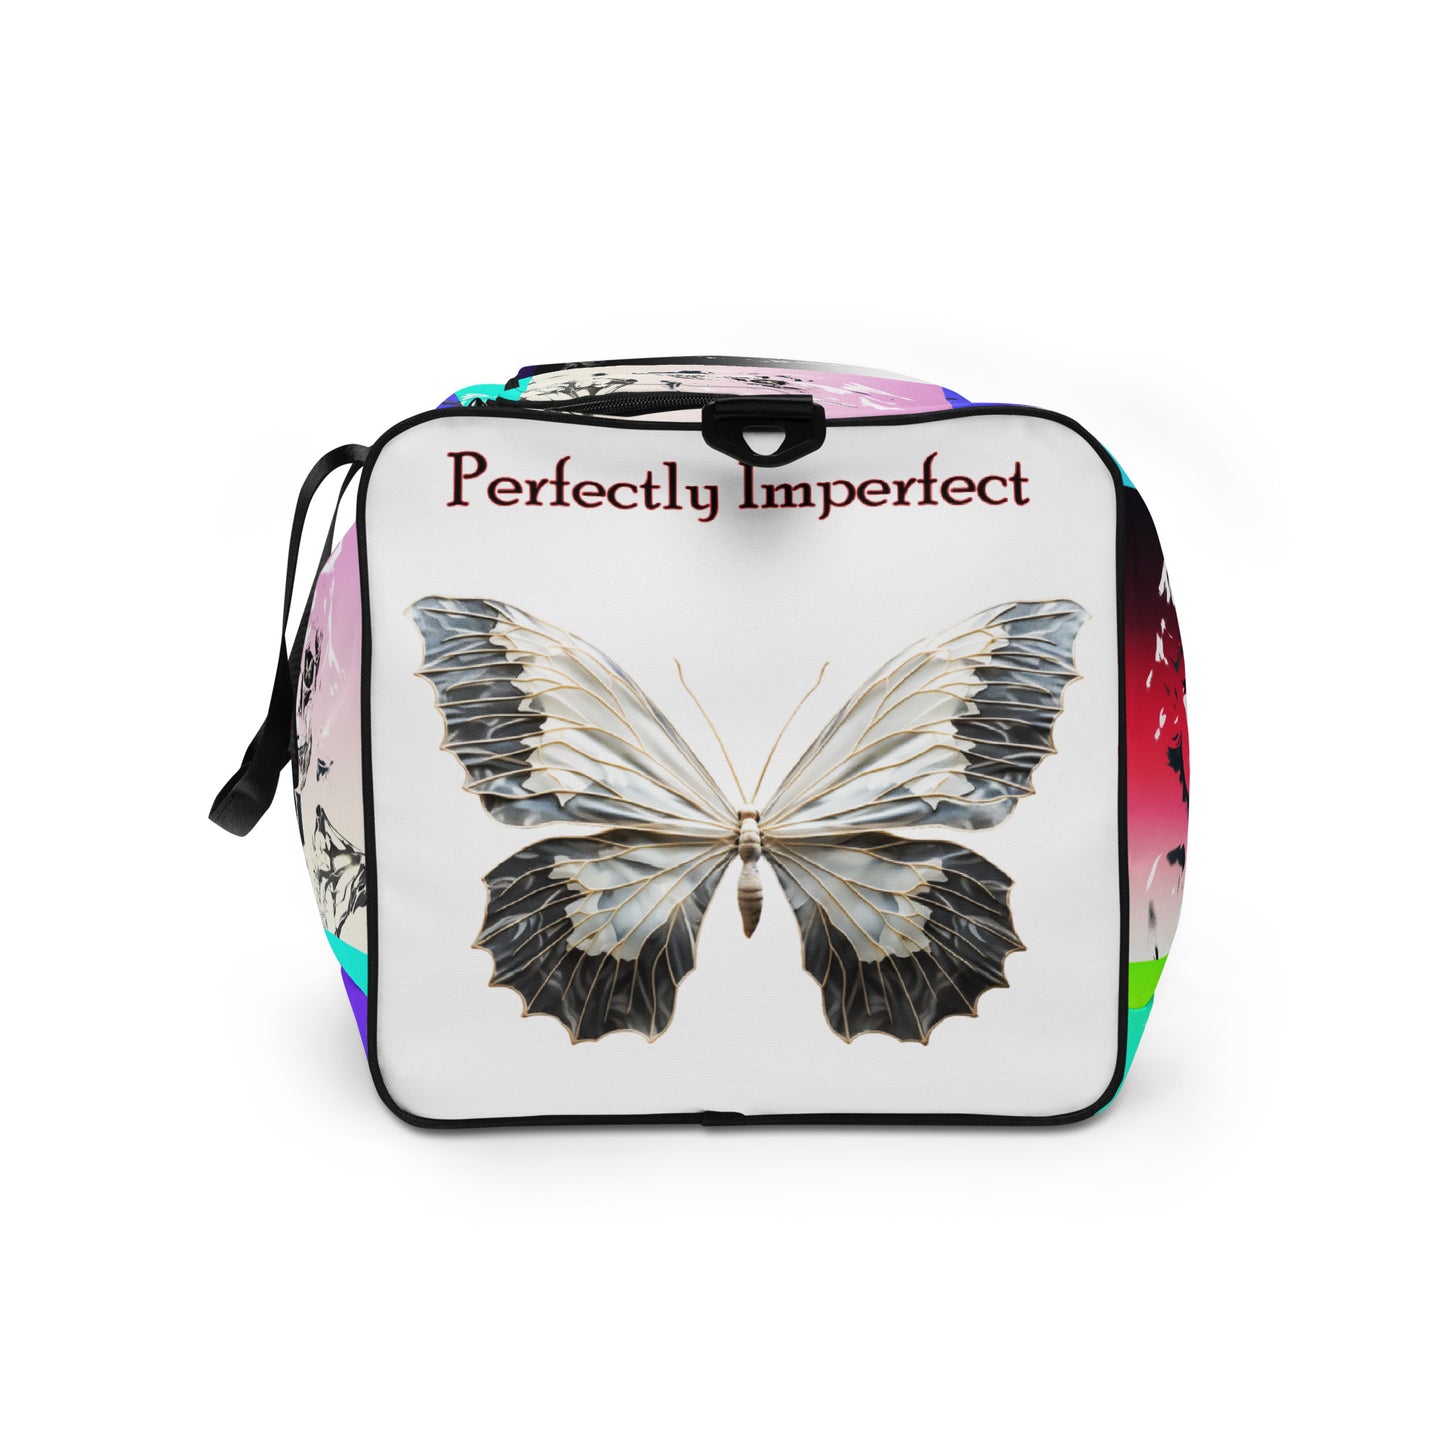 Perfectly Imperfect Marilyn Monroe Duffle Bag